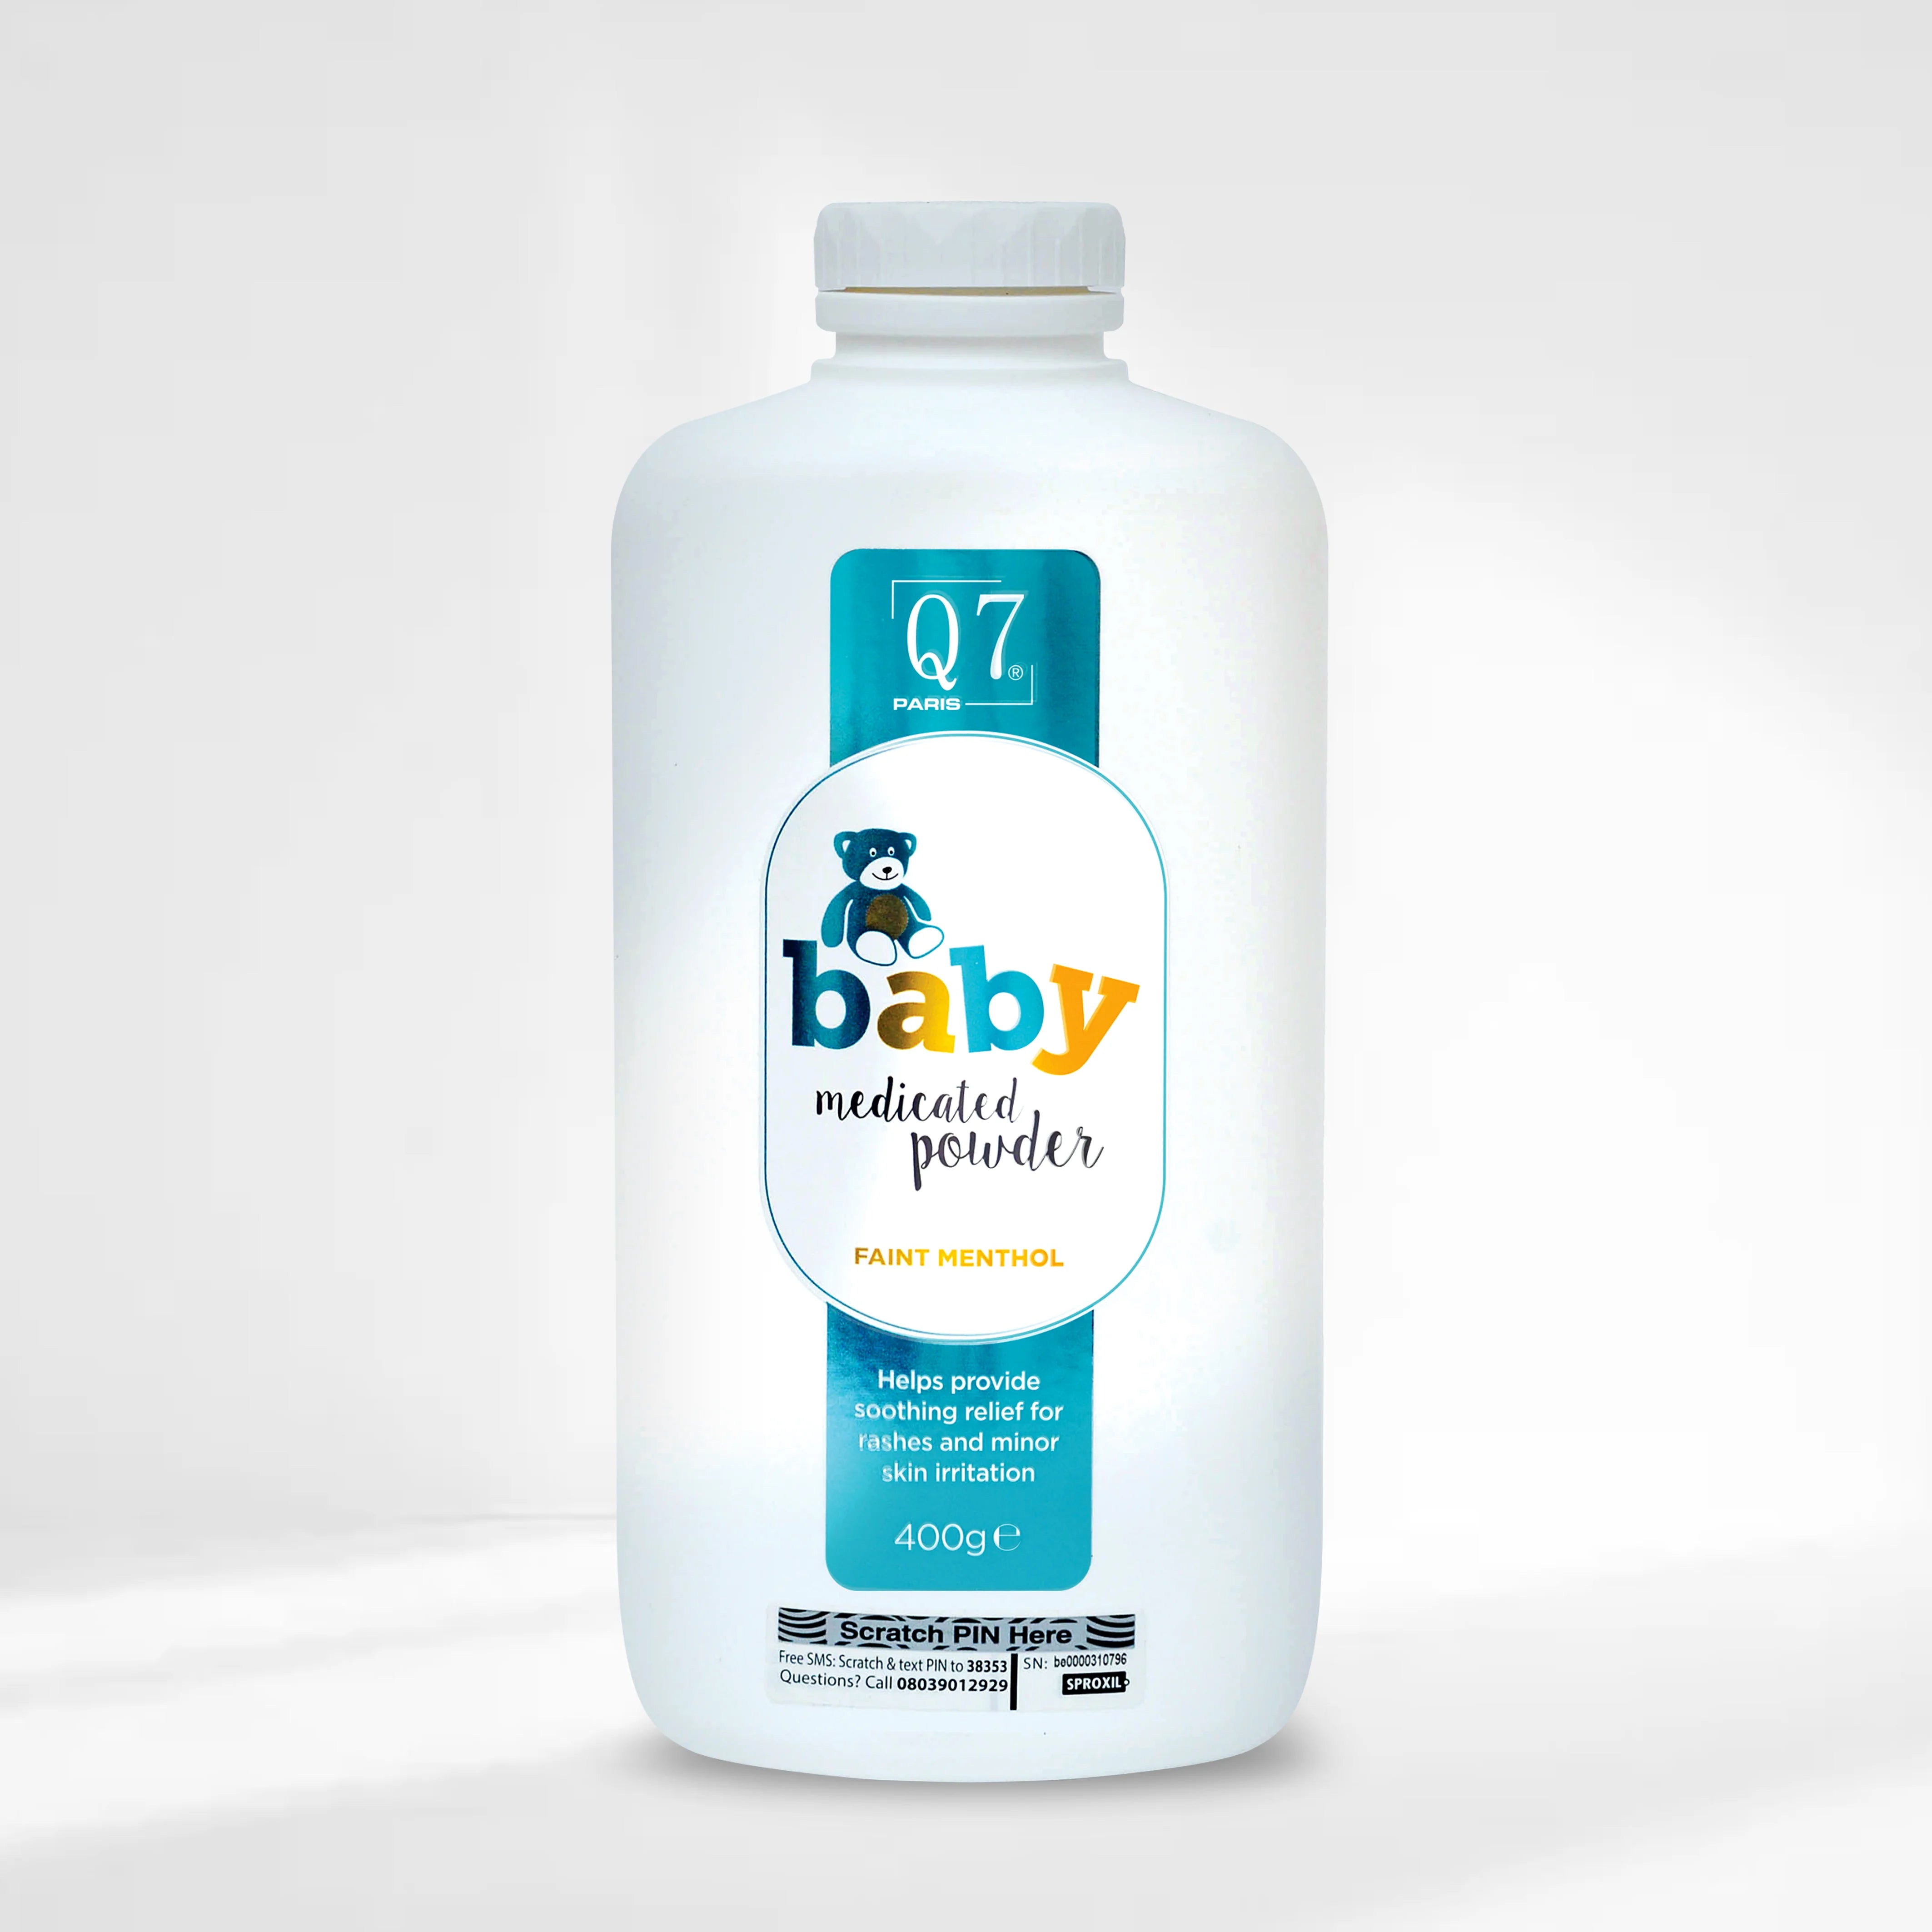 Q7 Baby Medicated Powder ('Faint Menthol') - 400g